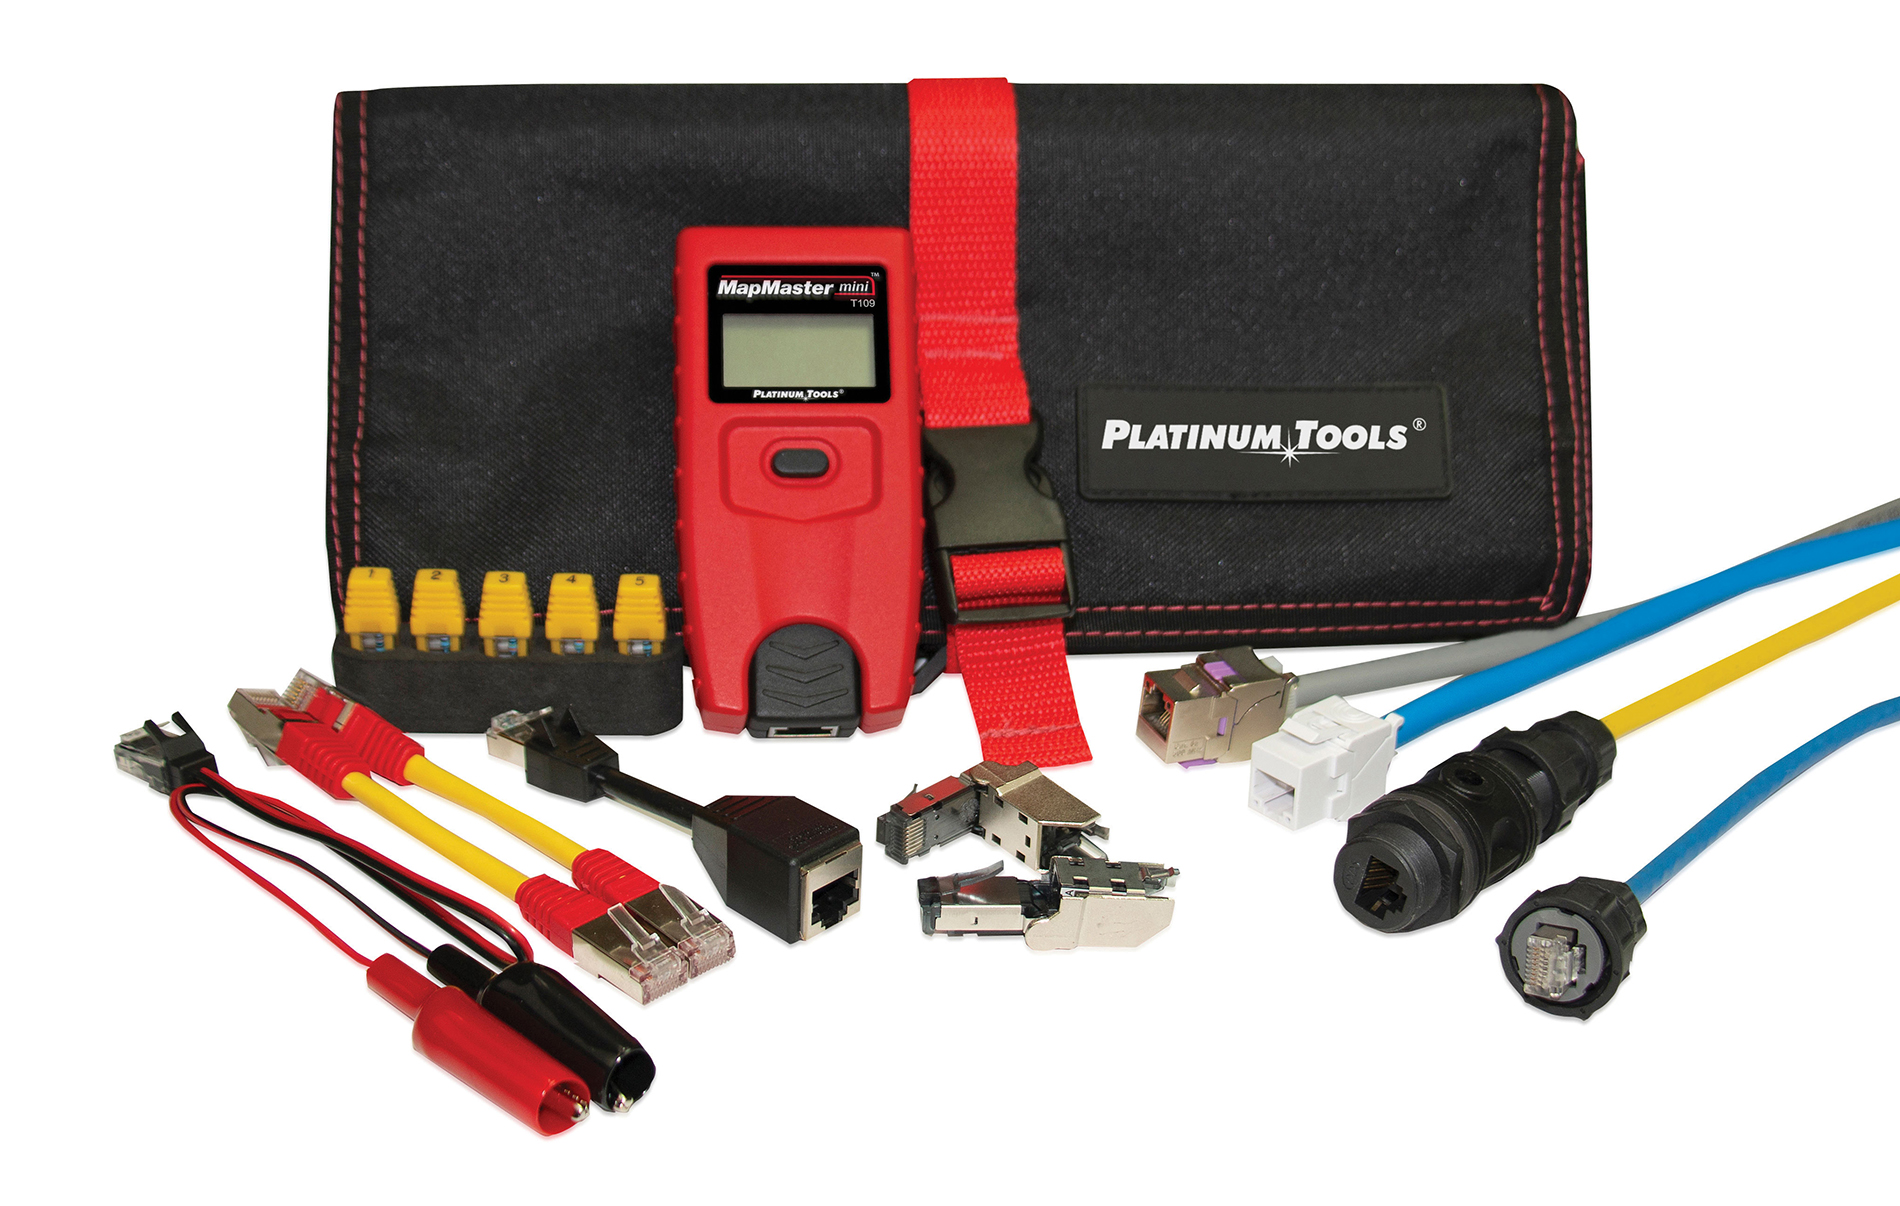 Platinum Tools' MapMaster Mini Product Kit